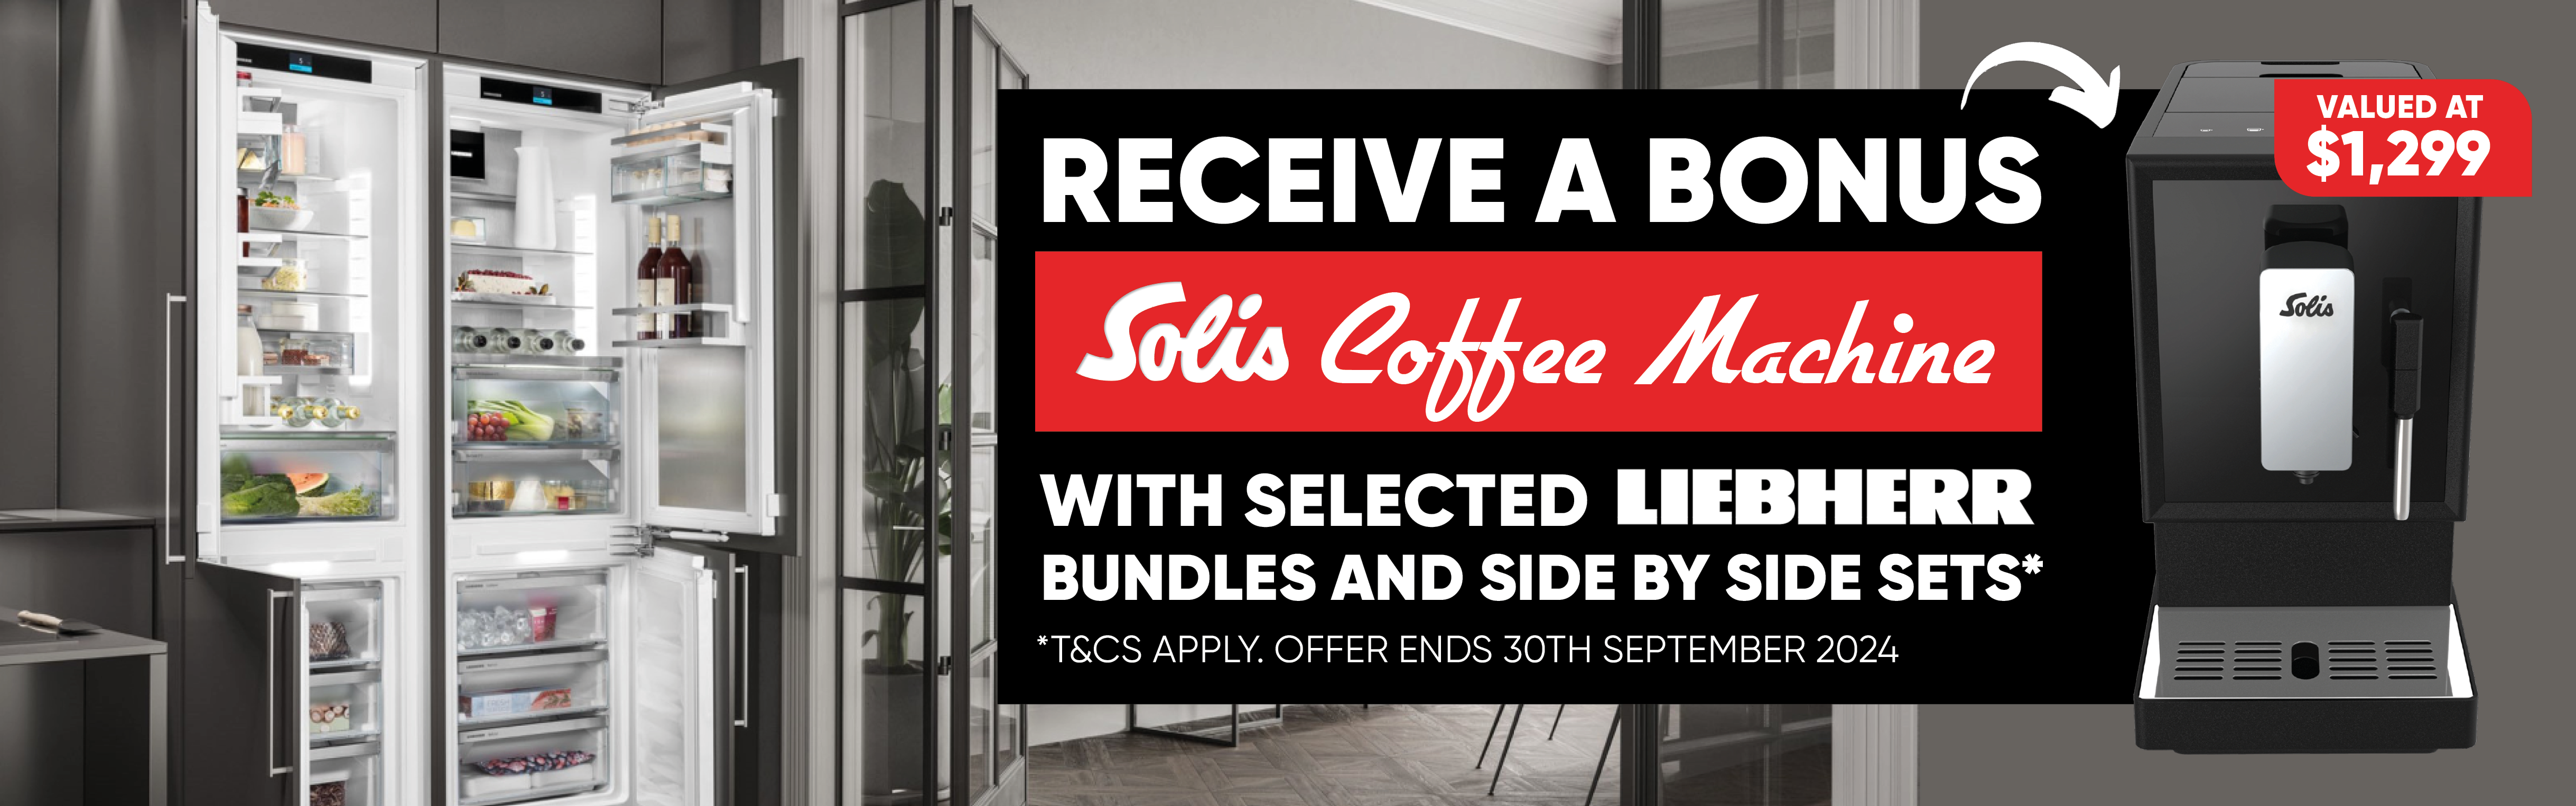 Liebherr bundle promotion   bonus coffee machine3